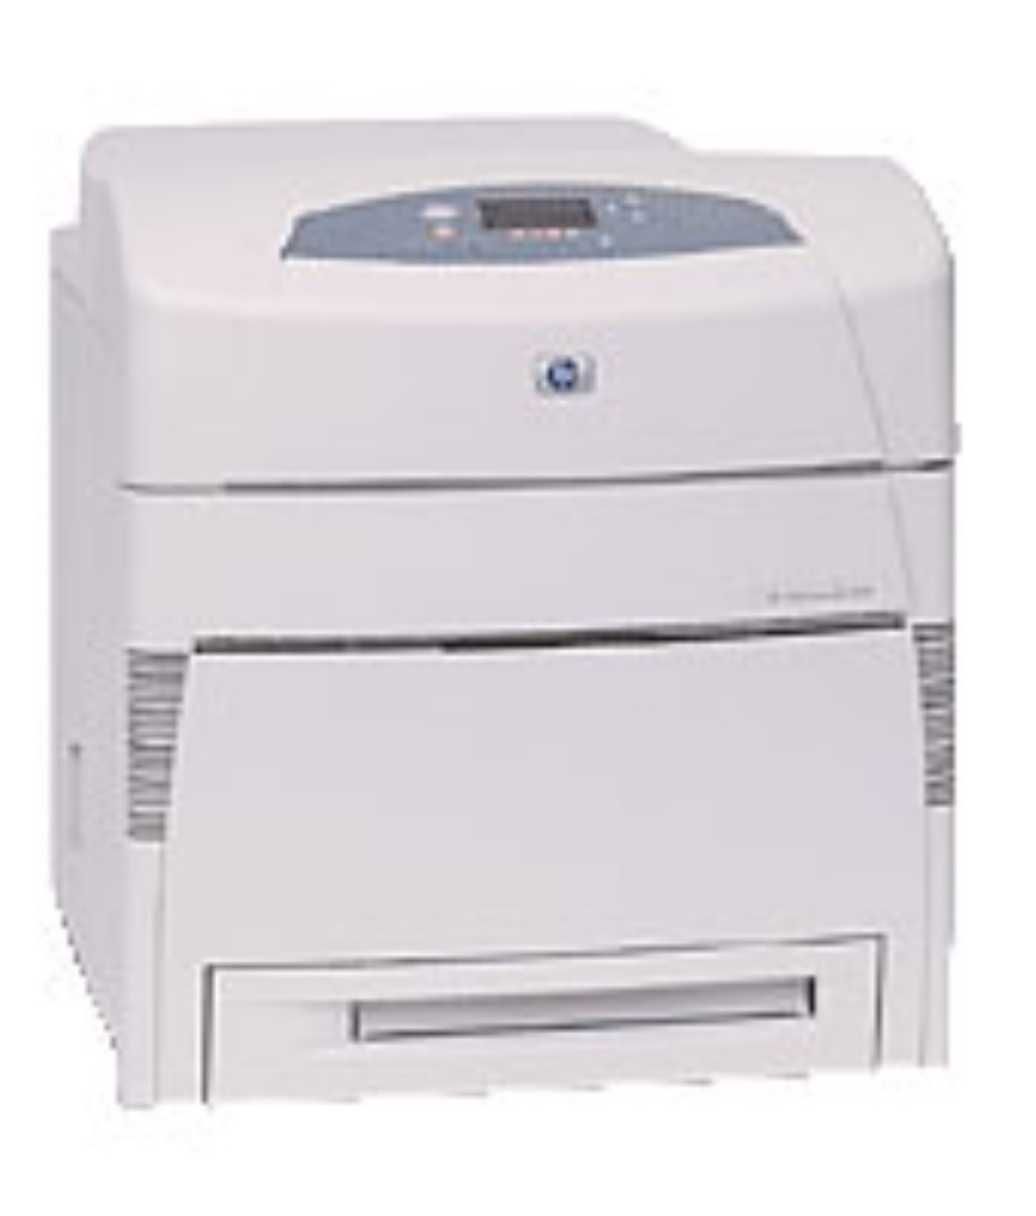 Принтер HP COLOR LAZER JET 5550n